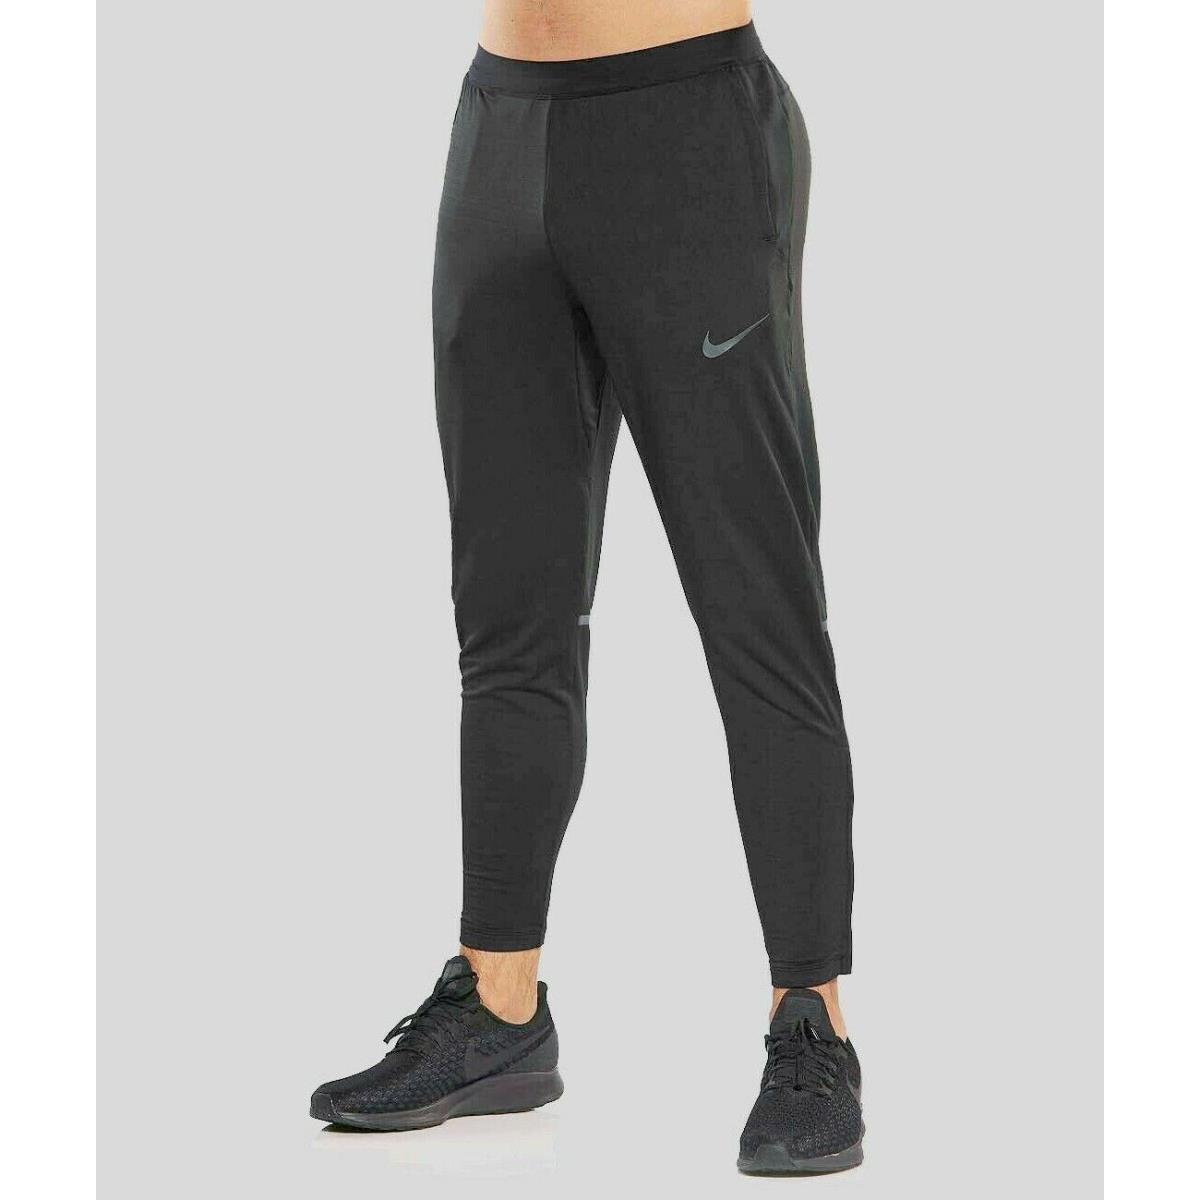 Nike Dri-fit Phenom Men s Running Pants Size Large Black CD5381-010